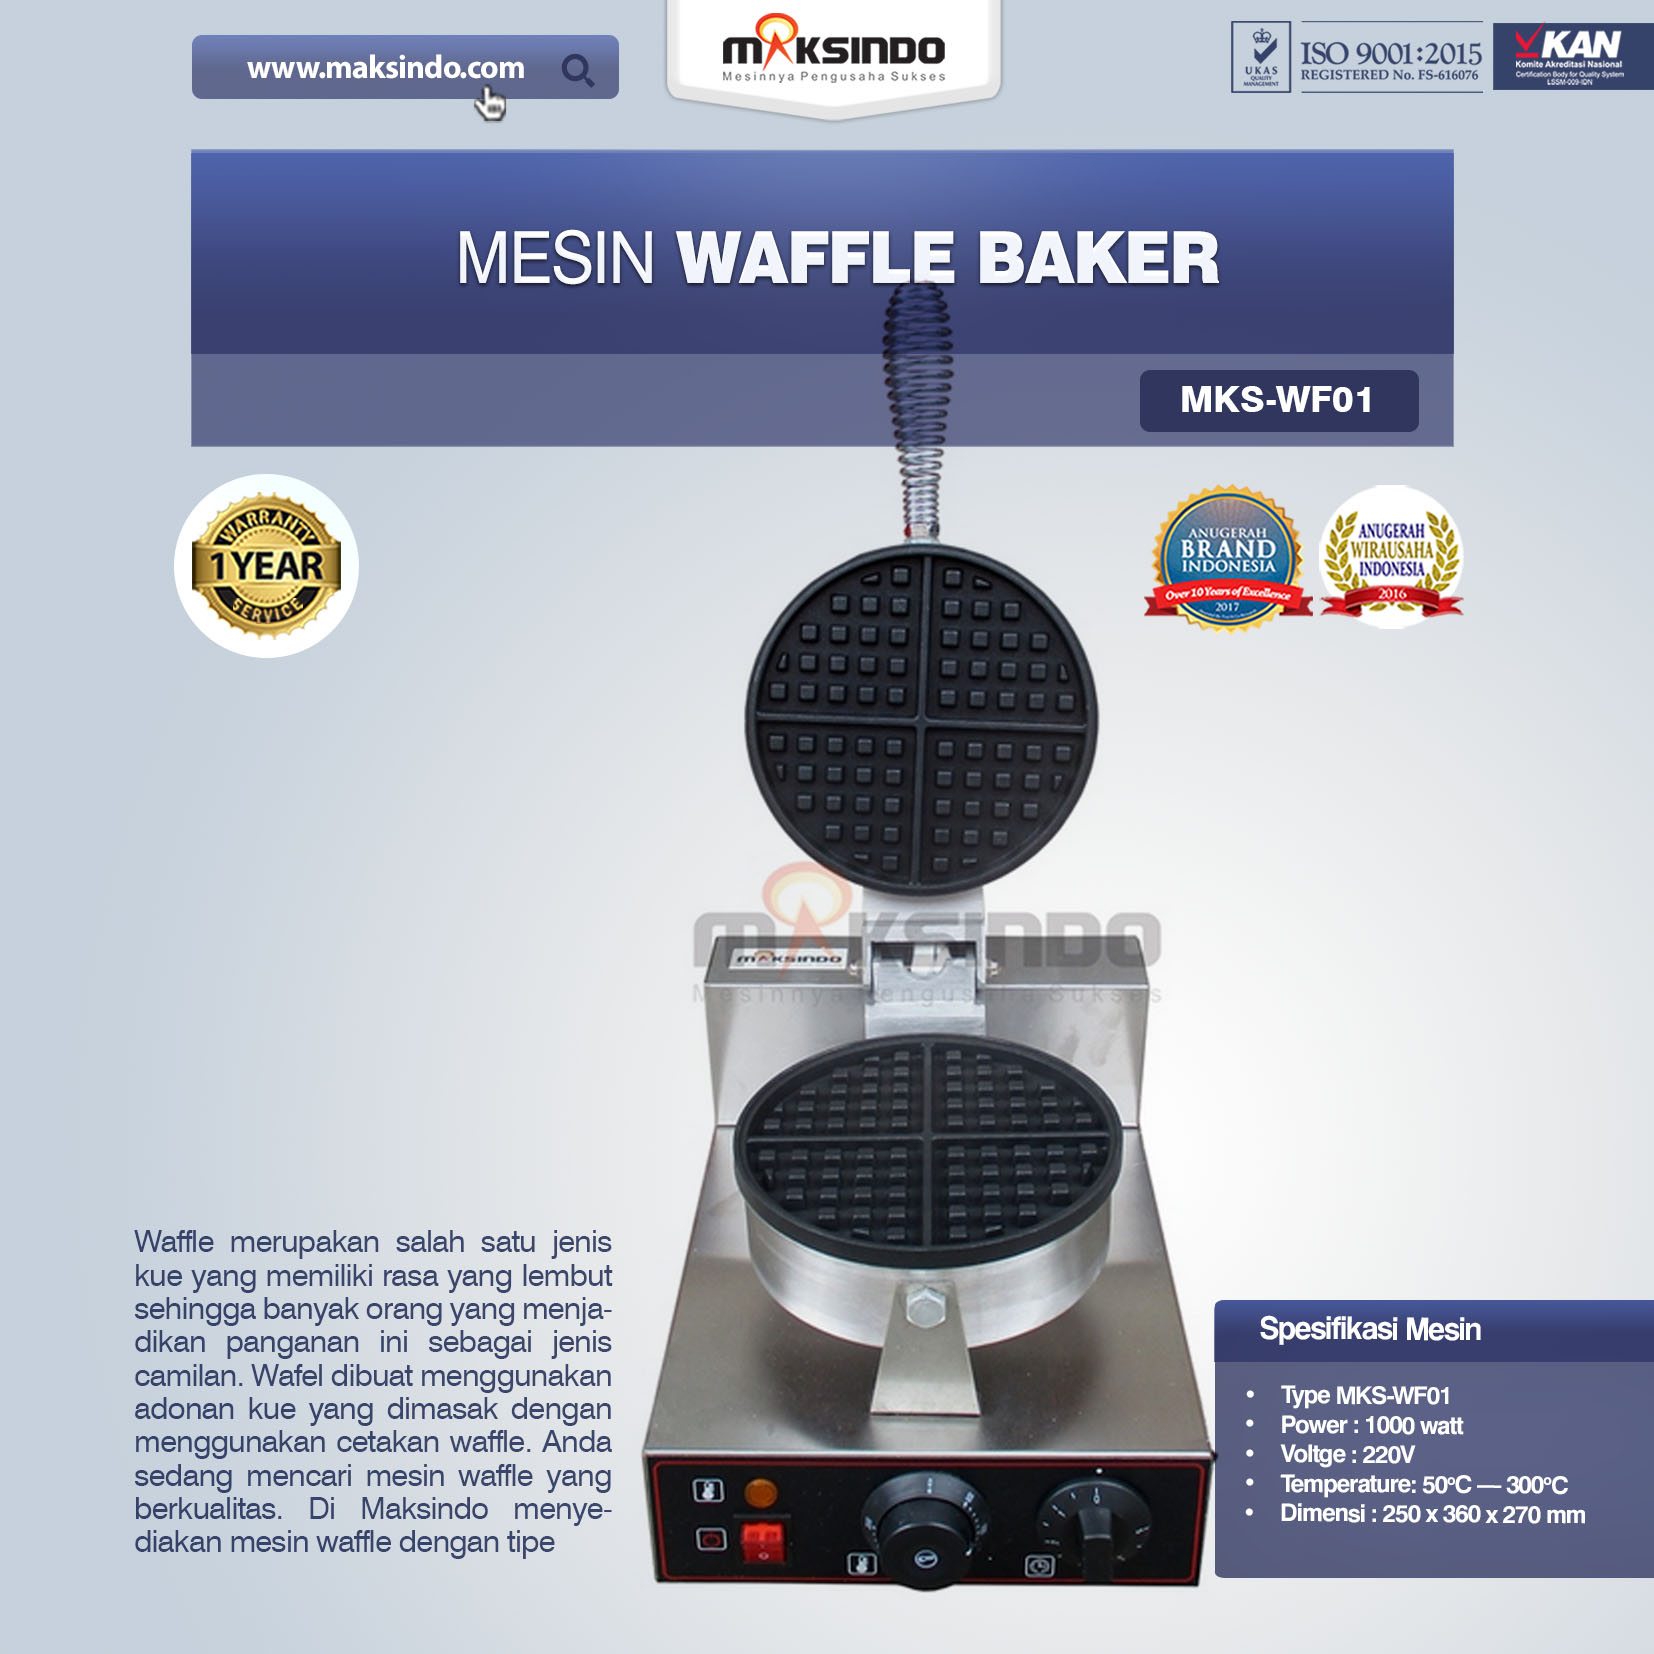 Mesin Waffle Baker MKS-WF01